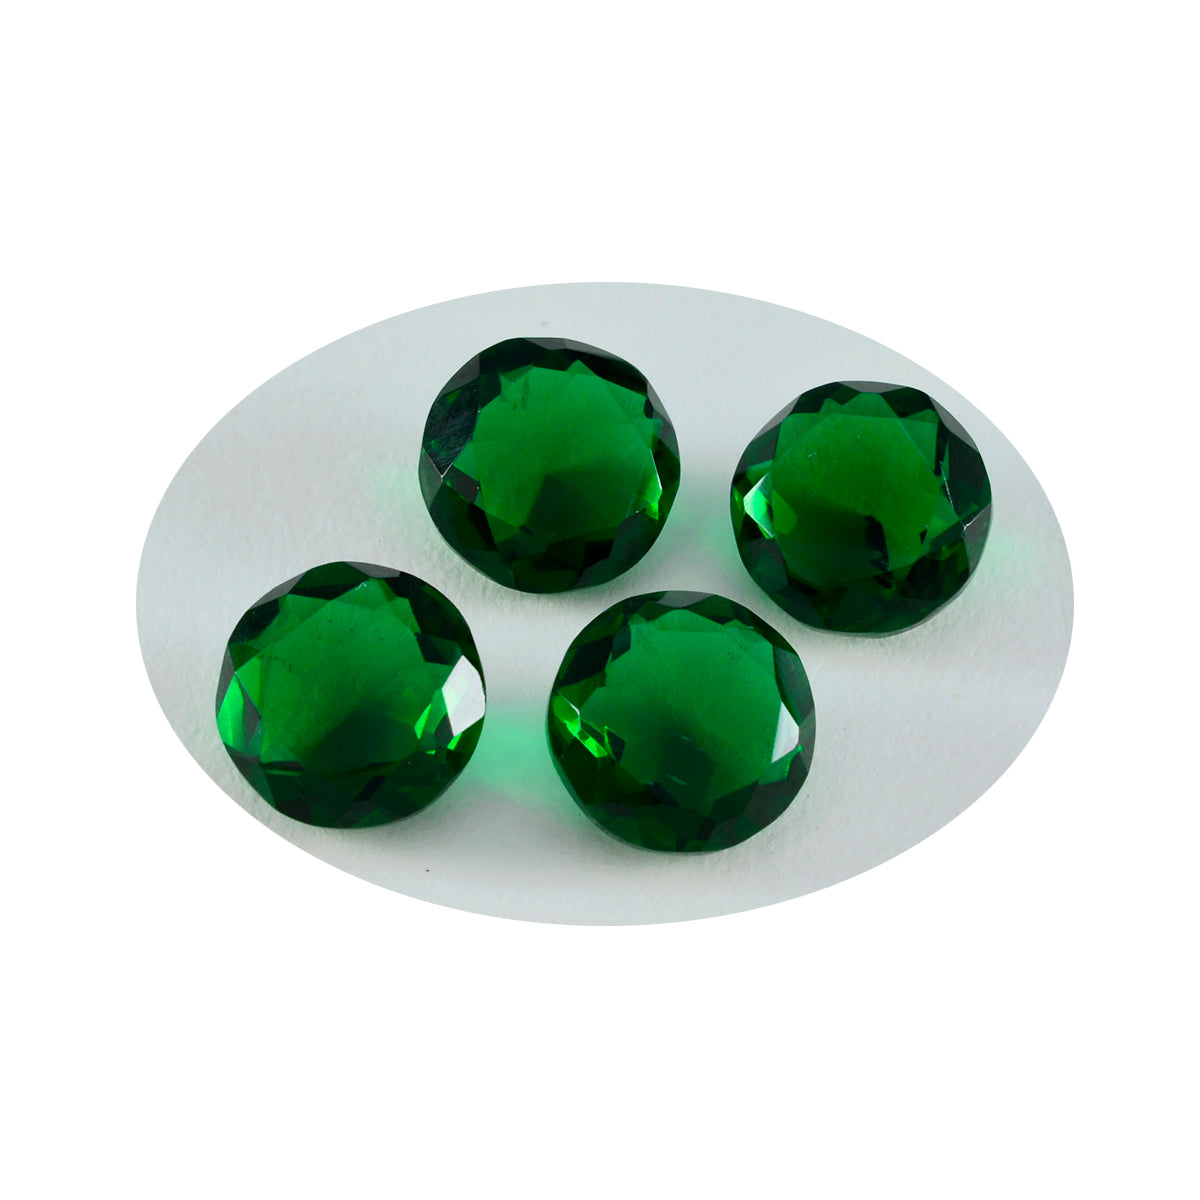 Riyogems 1PC Green Emerald CZ Faceted 11x11 mm Round Shape A1 Quality Loose Gemstone